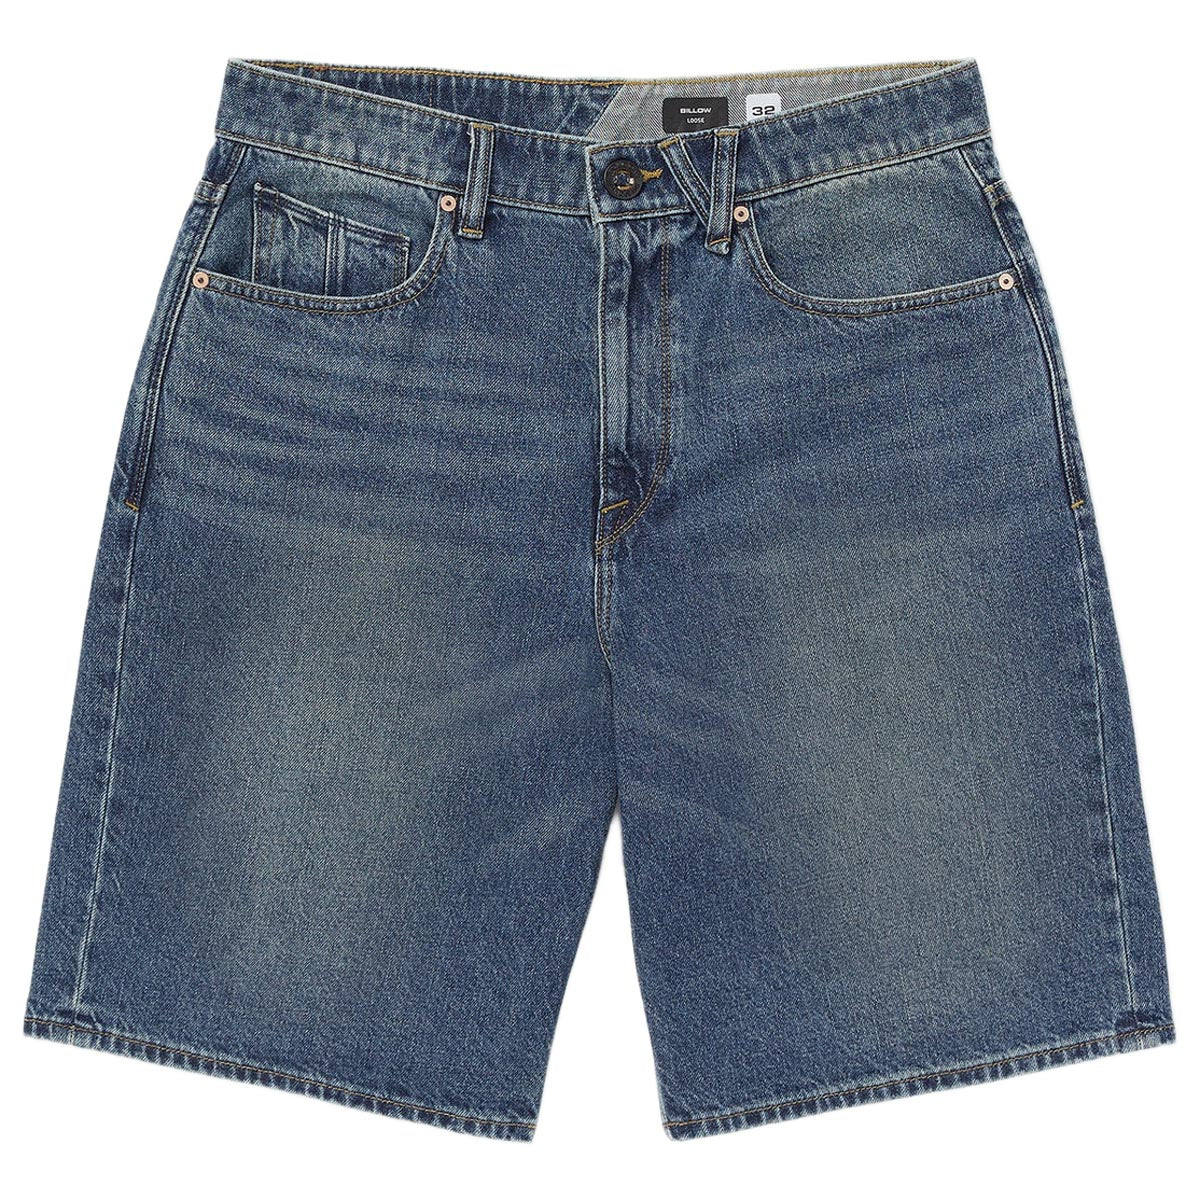 Volcom Billow Denim Shorts - Classic Blue image 1